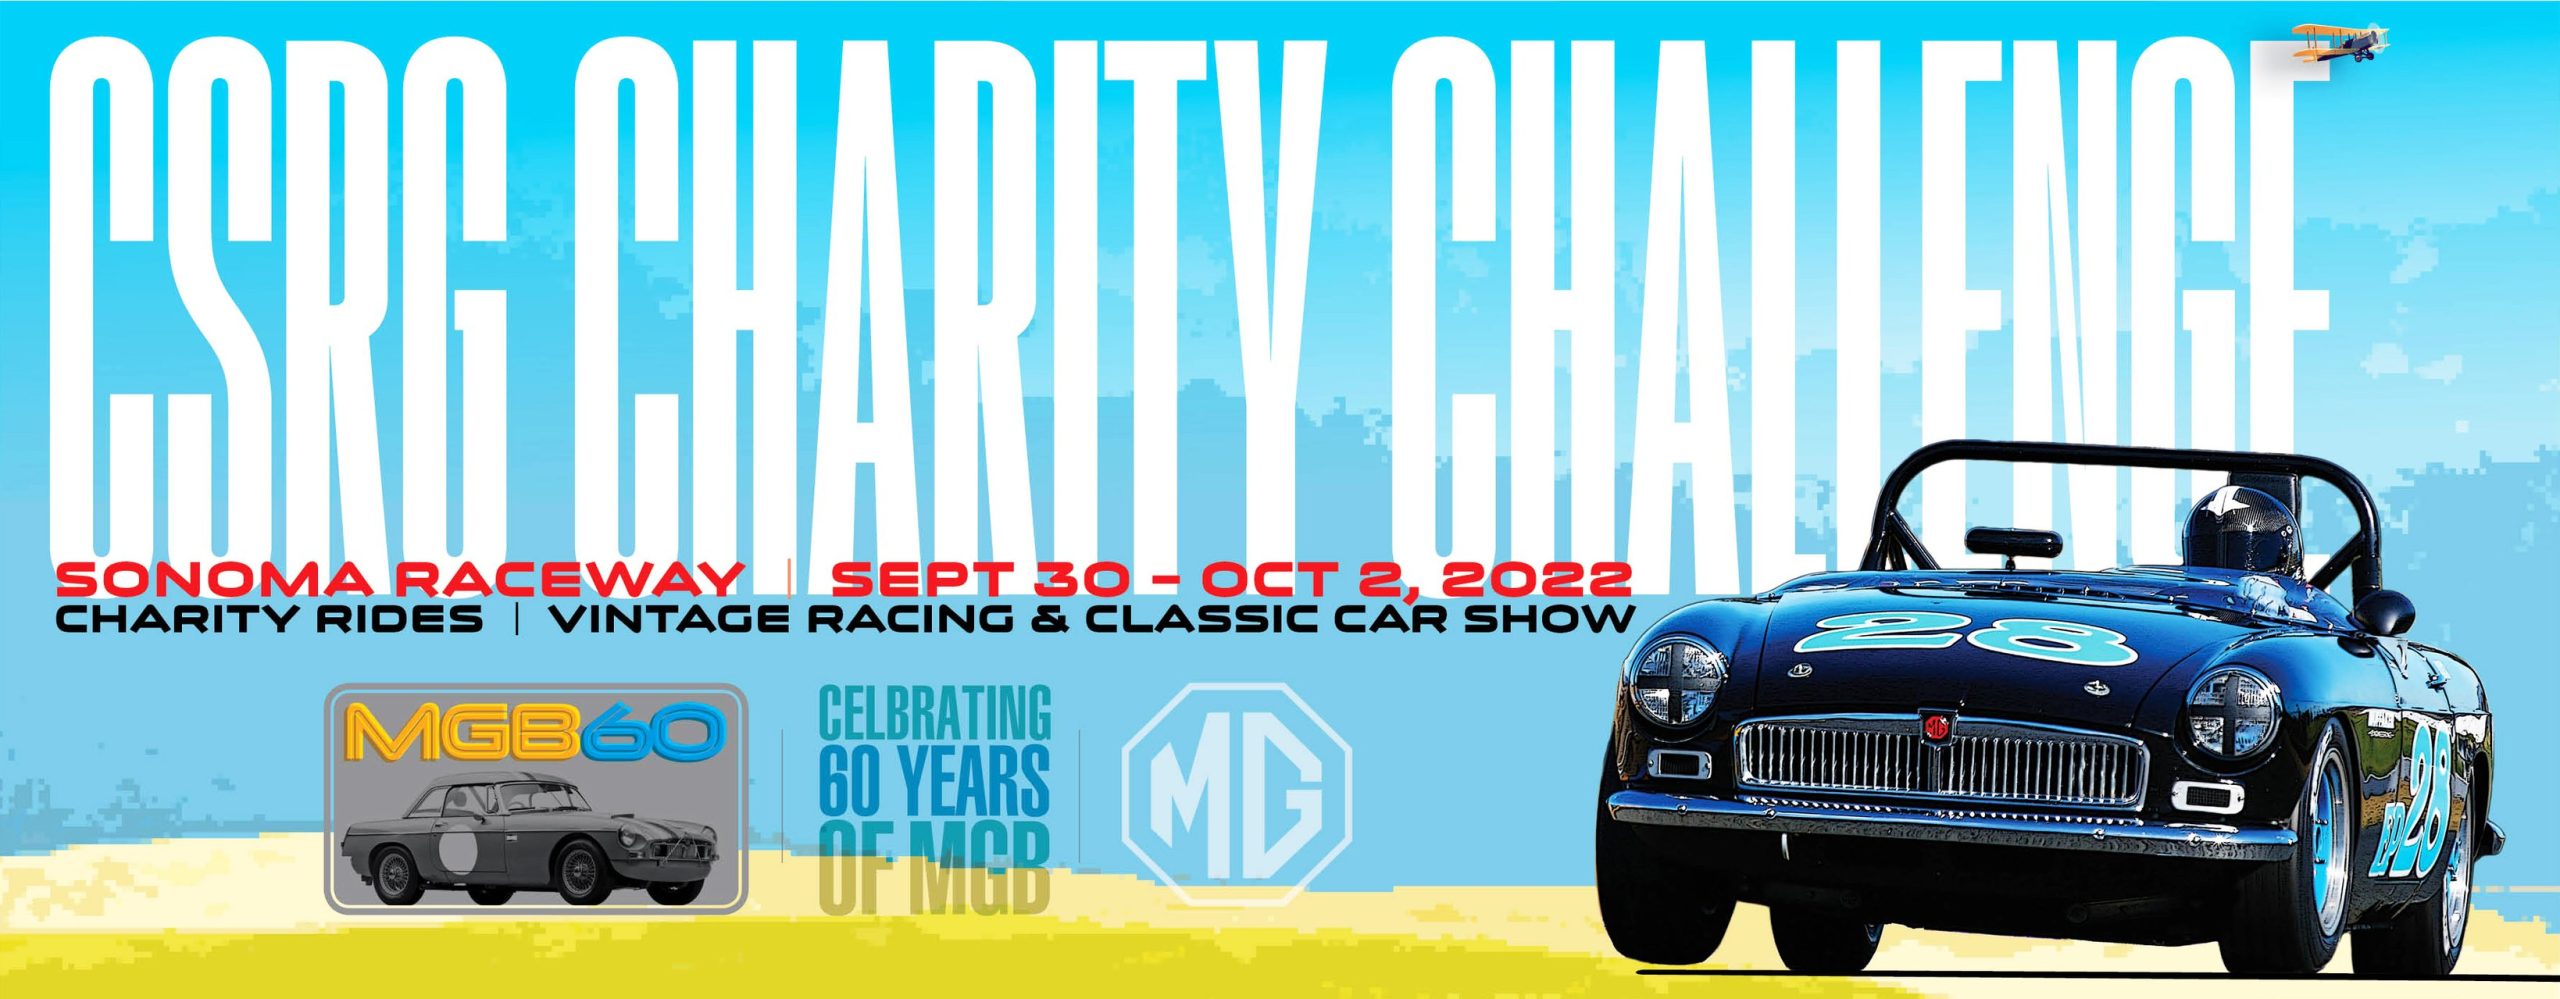 CSRG Charity Challenge Vintage Races